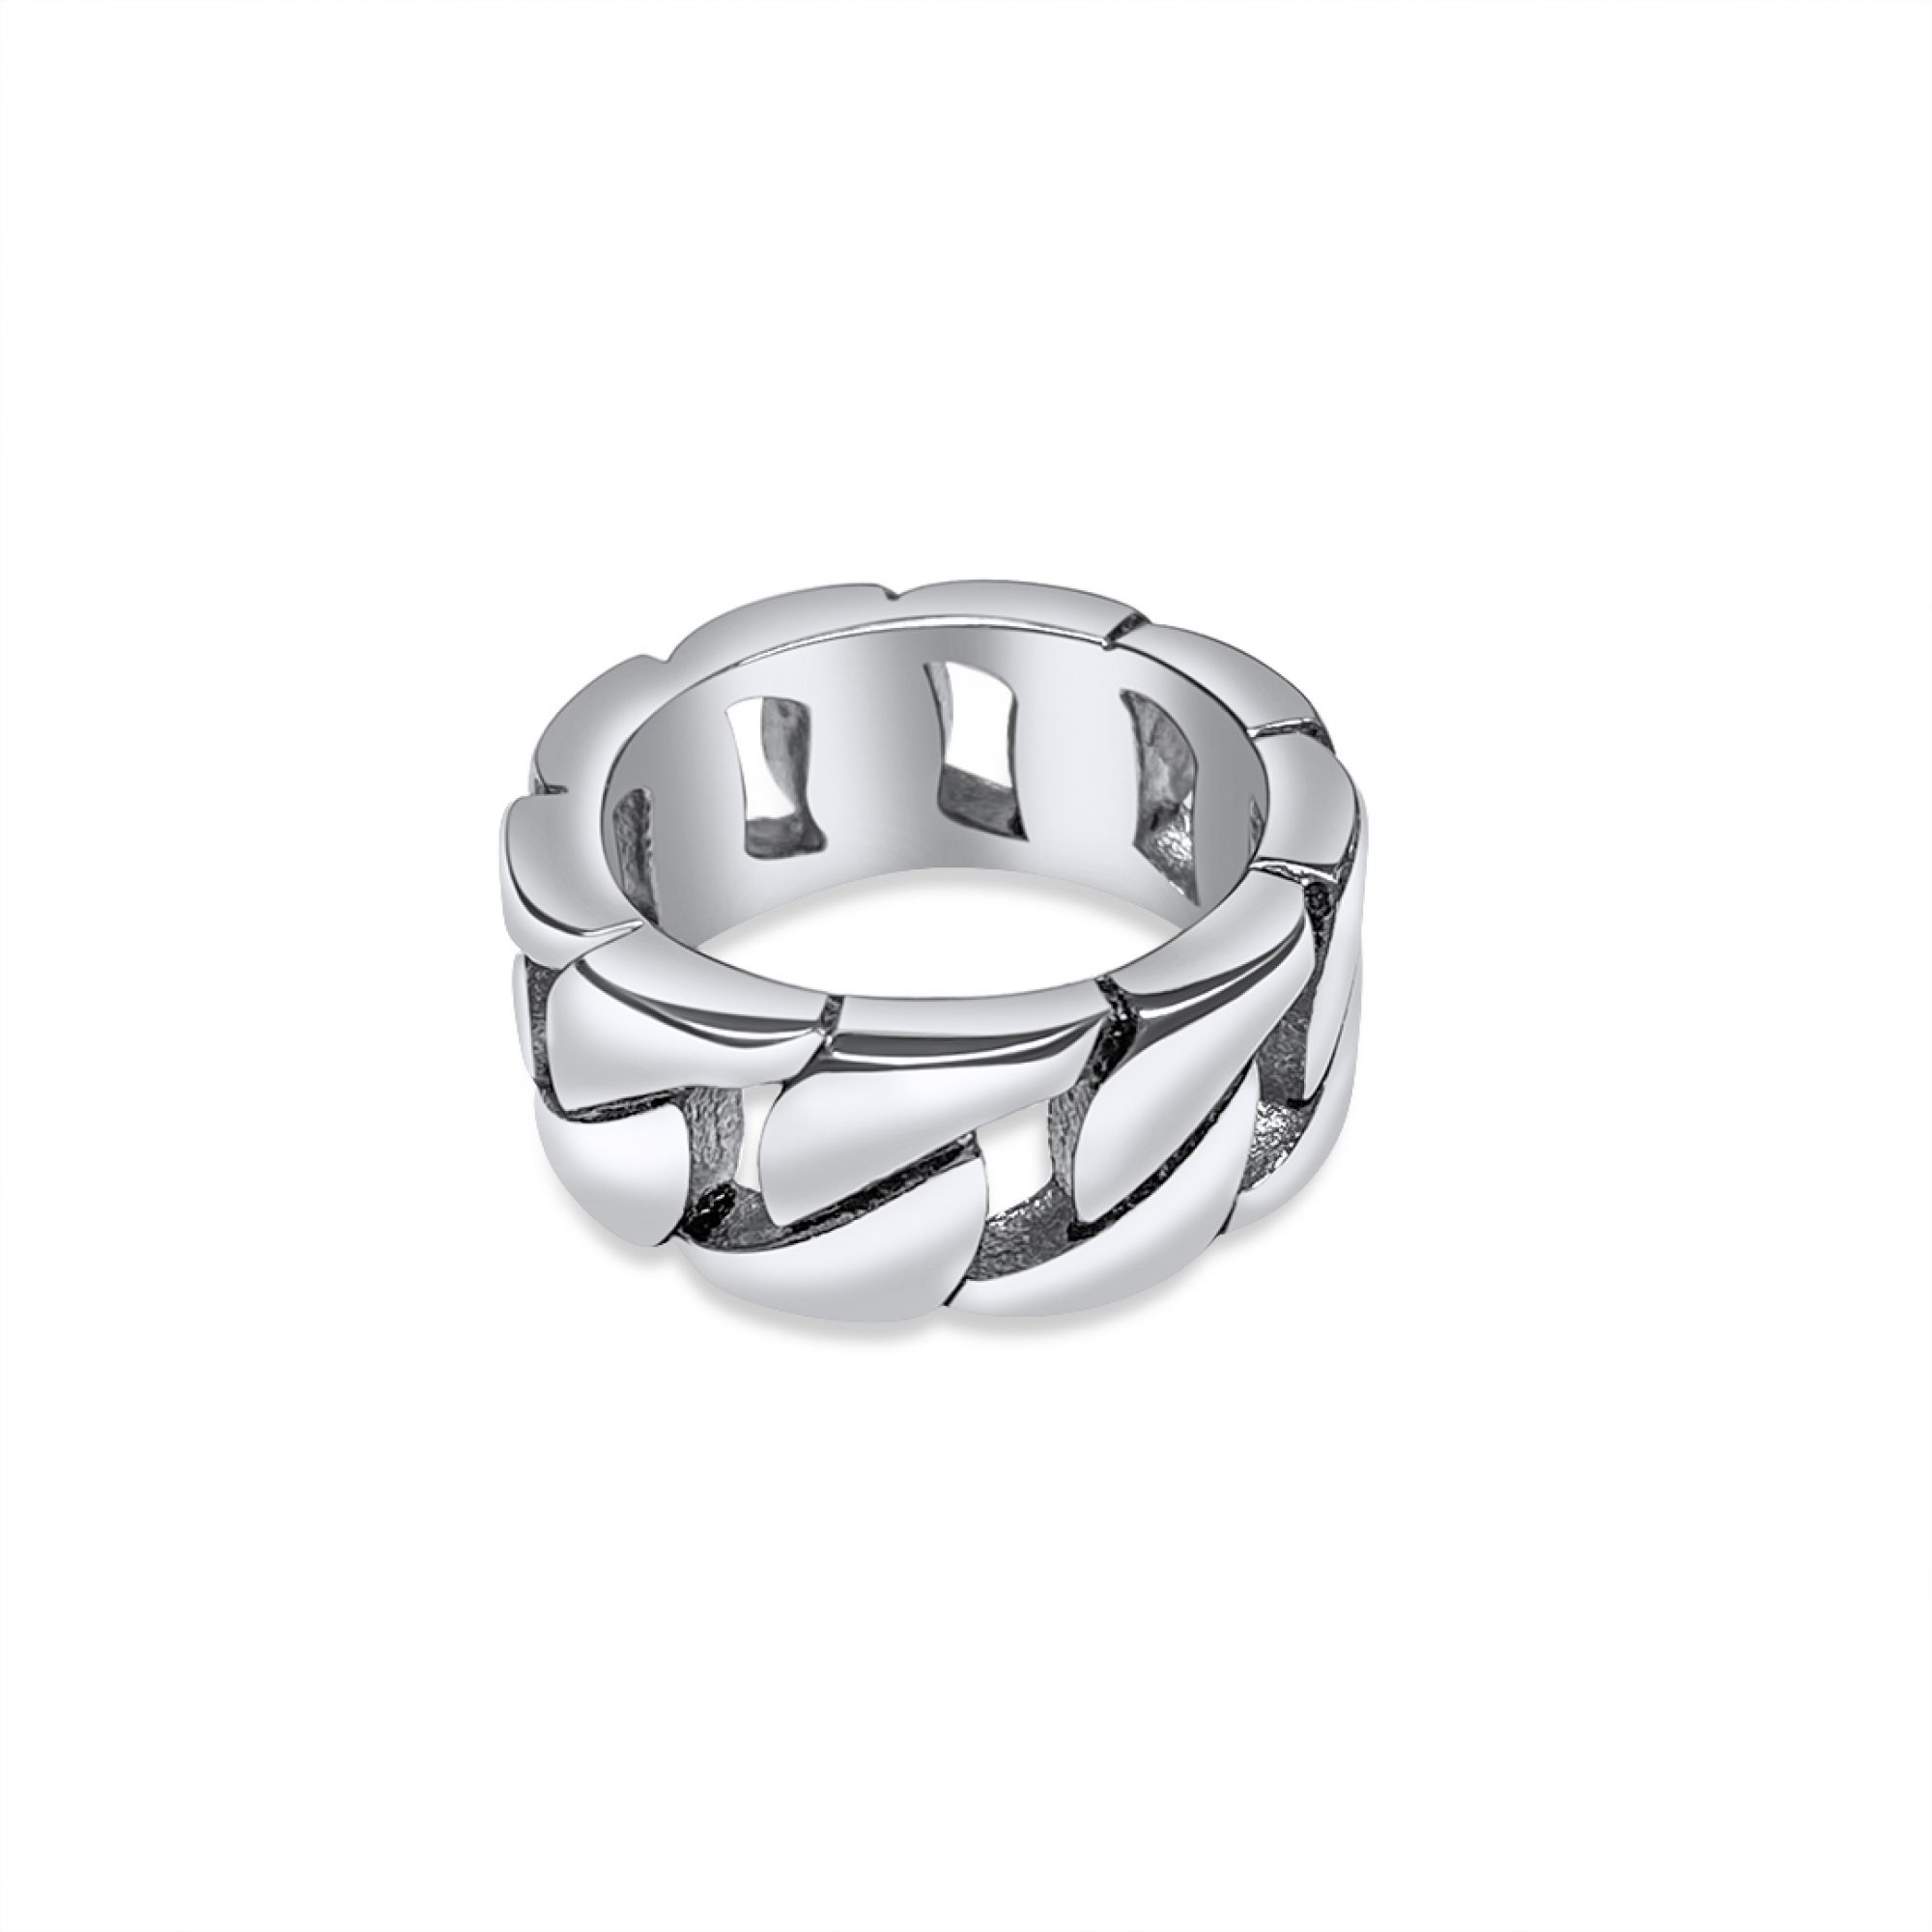 Steel chain ring